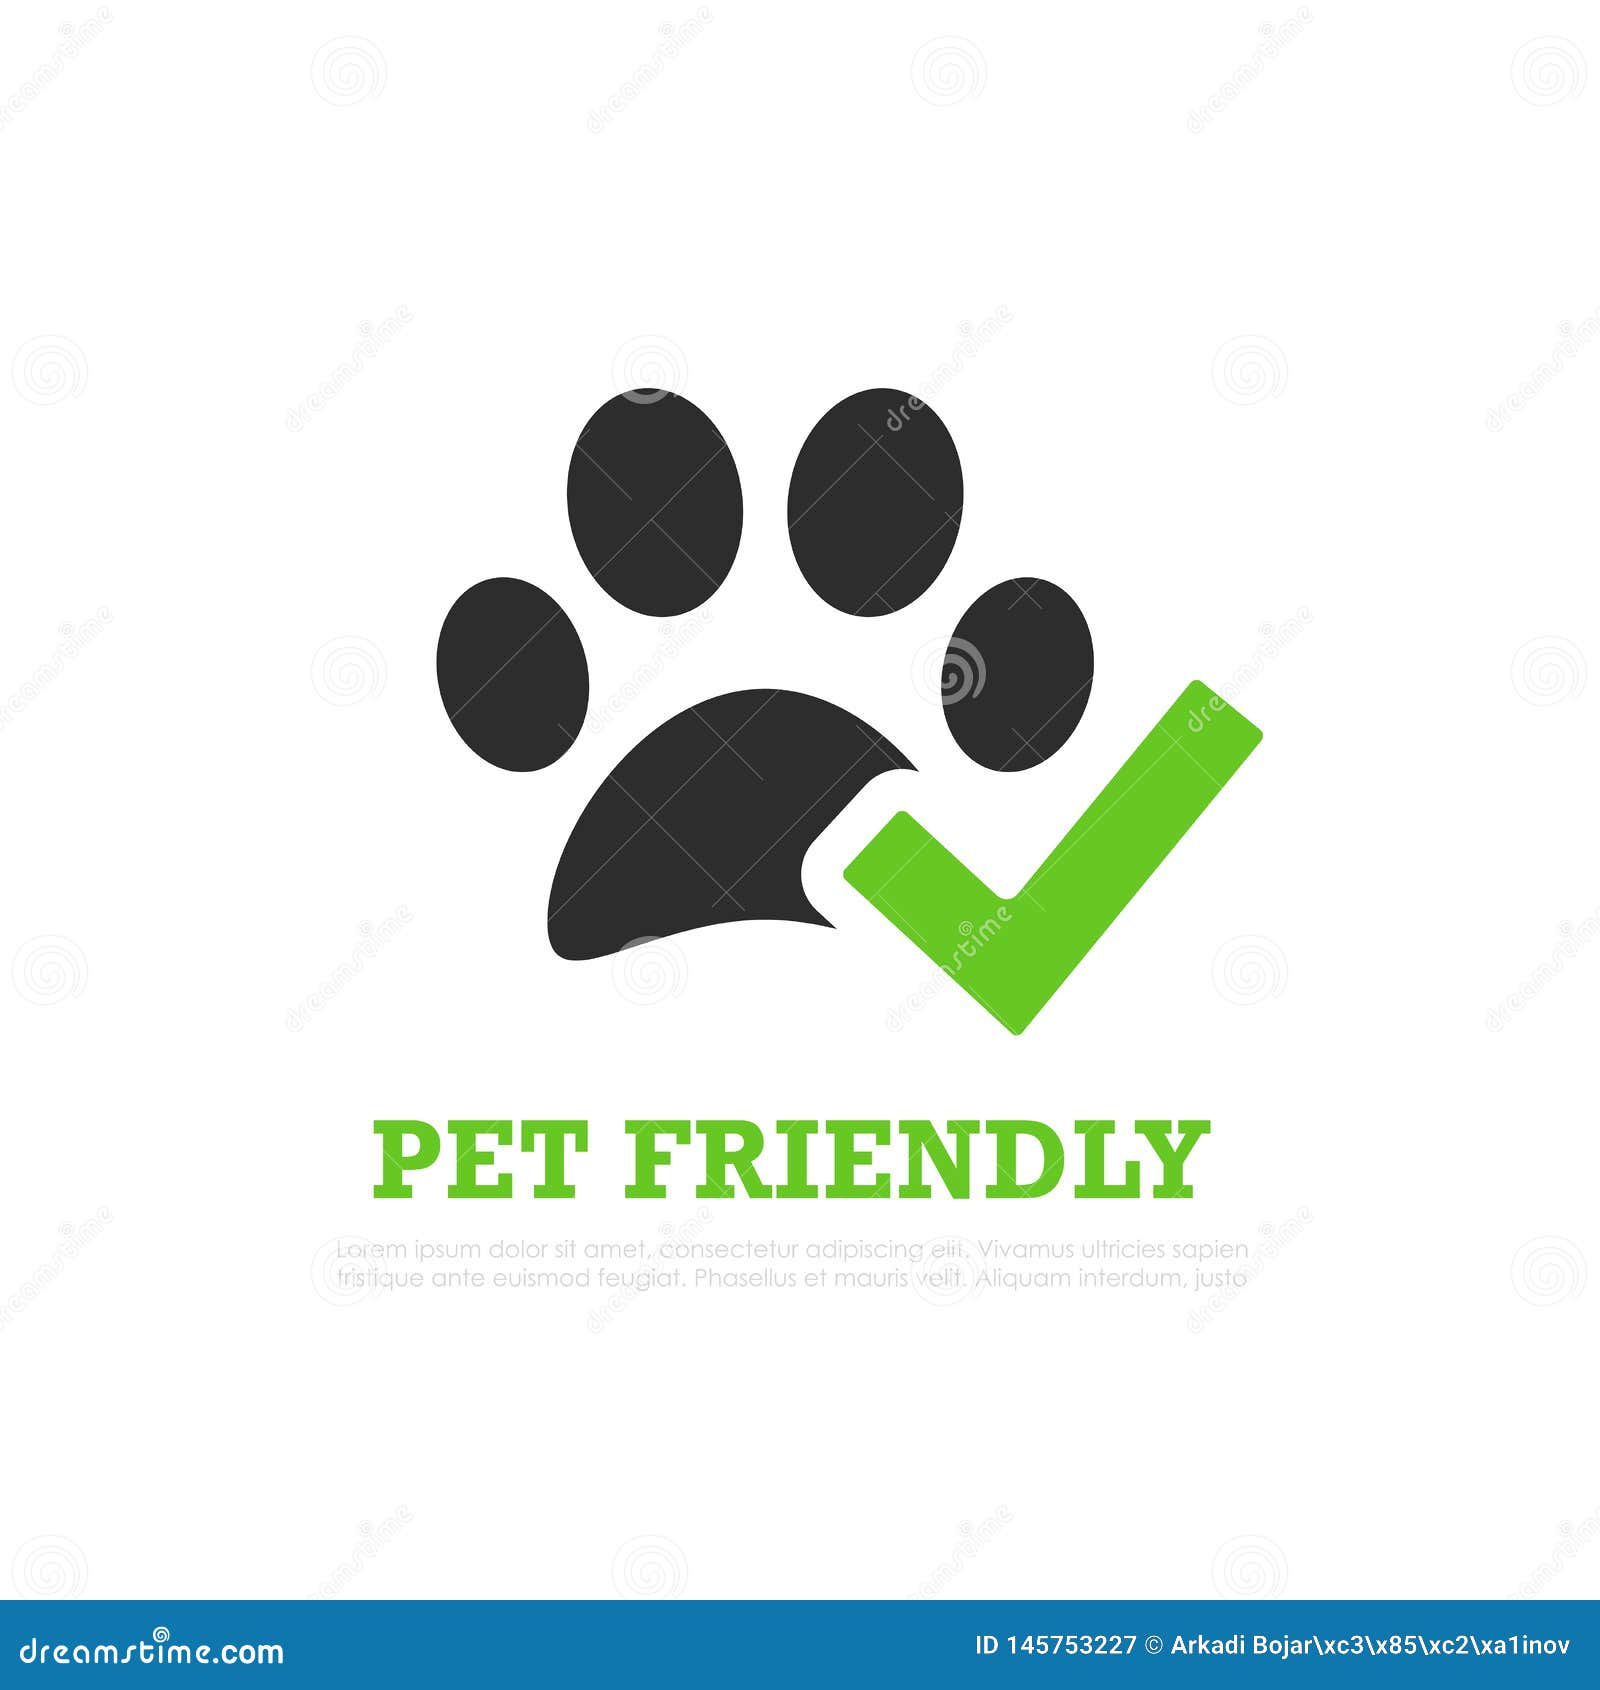 Pet friendly vector logo stock vector. Illustration of canine - 145753227